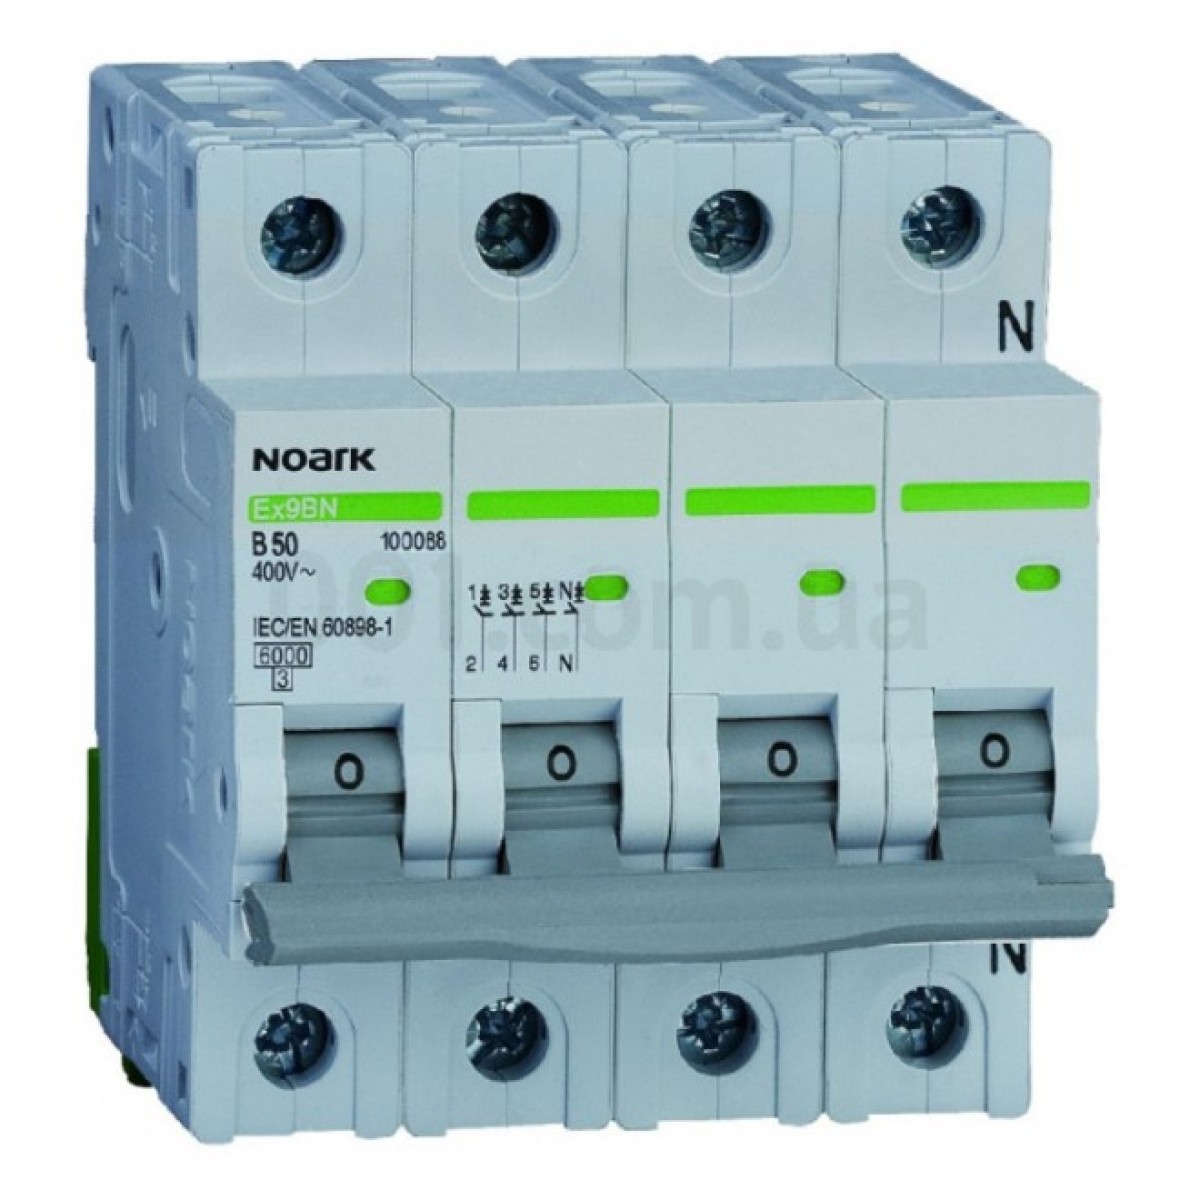 Модульный автоматический выключатель Ex9BN 6kA хар-ка C 32A 3P+N, NOARK 256_256.jpg